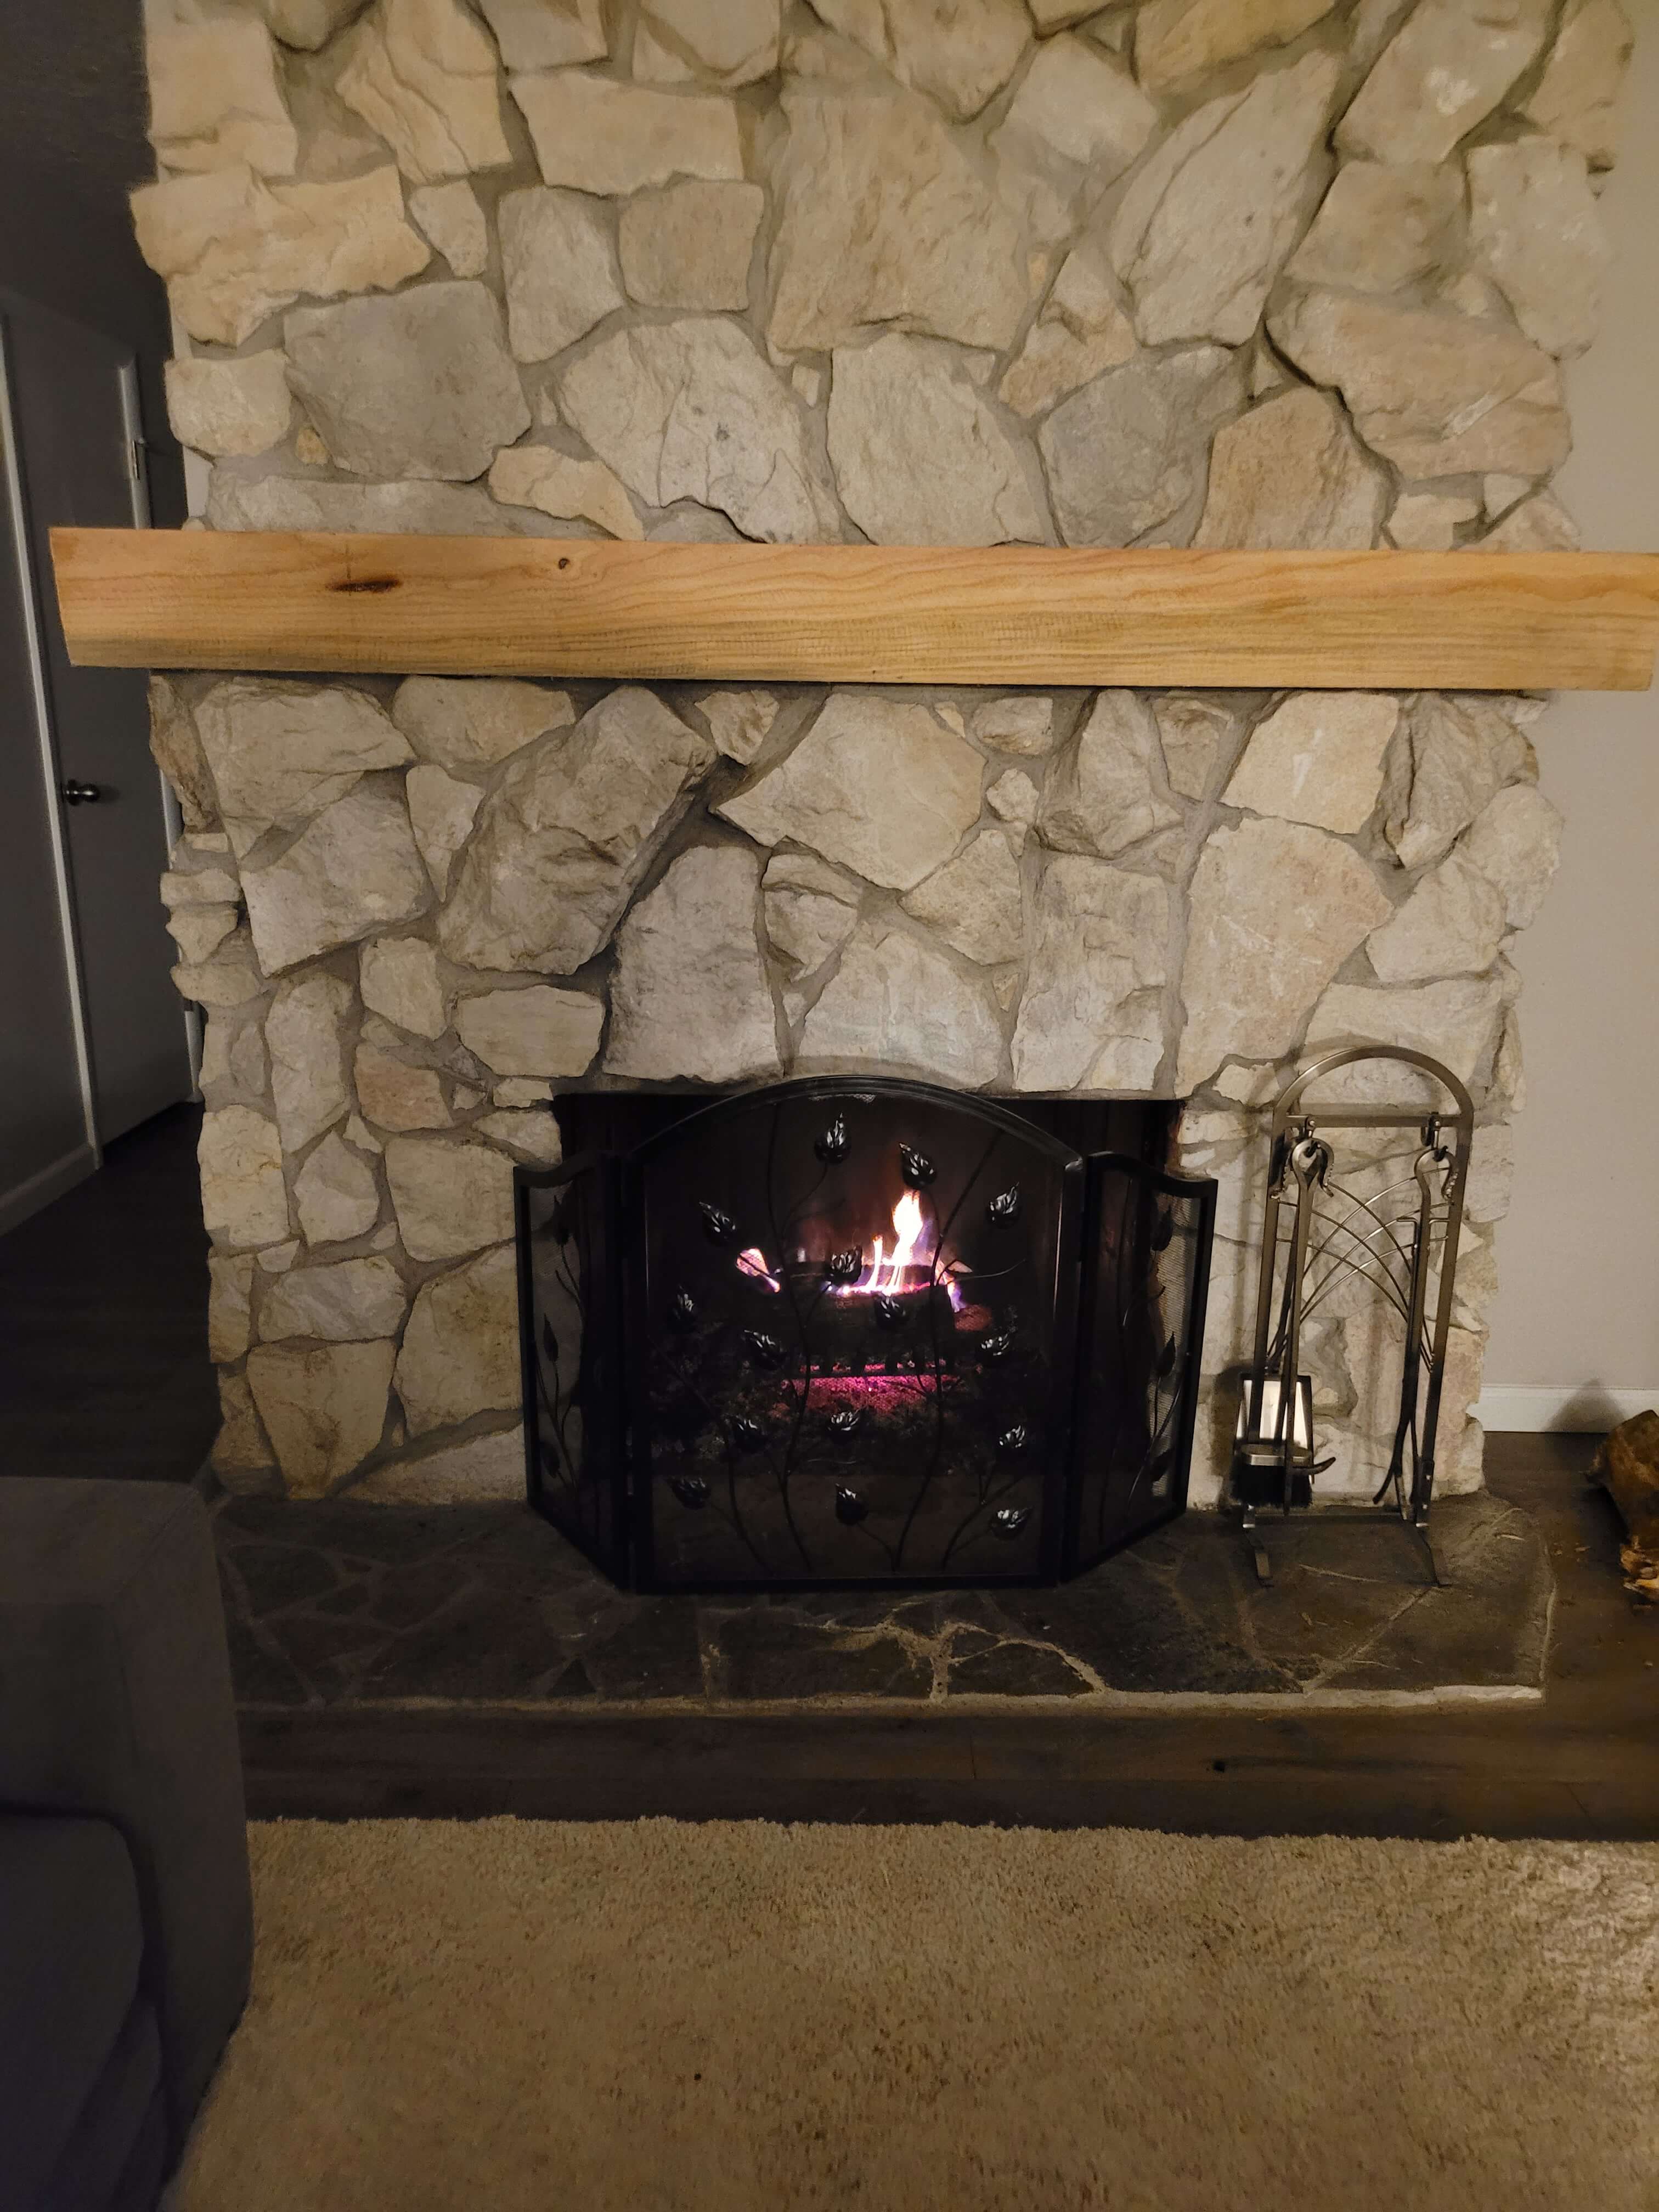 Fir slab used as a fireplace mantel